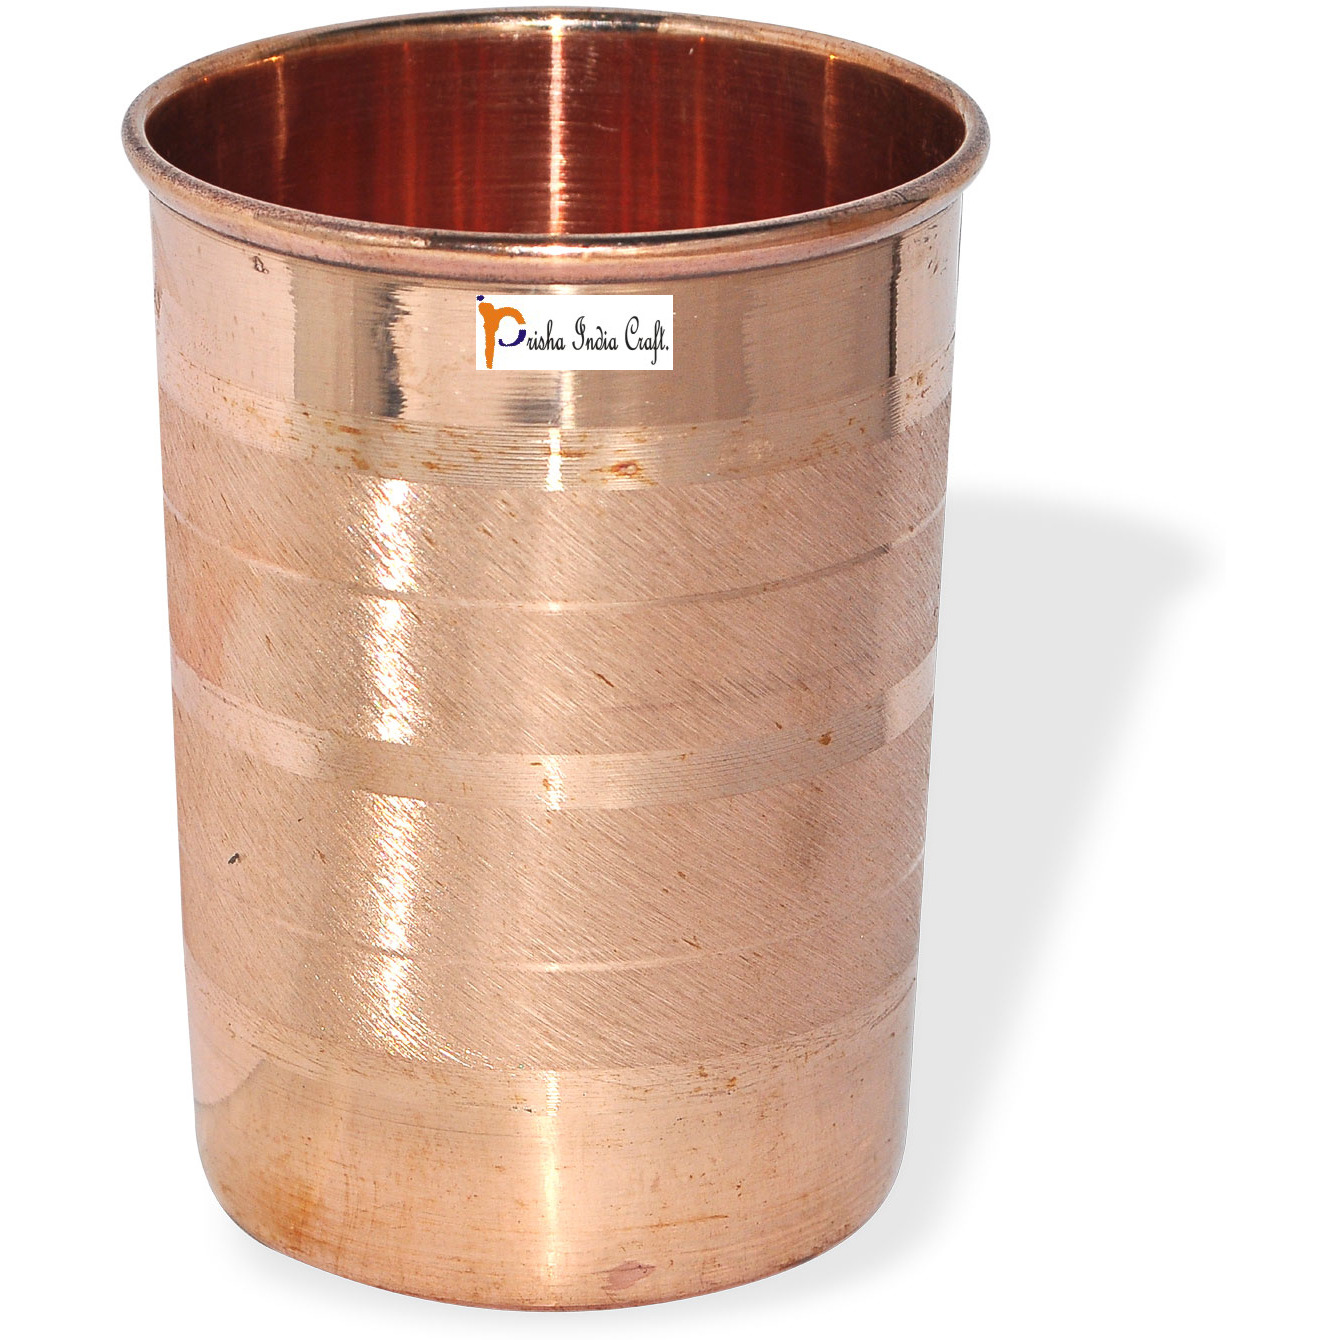 Set of 6 - Prisha India Craft B. Copper Cup Water Tumbler - Handmade Water Glasses - Traveller's Copper Mug for Ayurveda Benefits